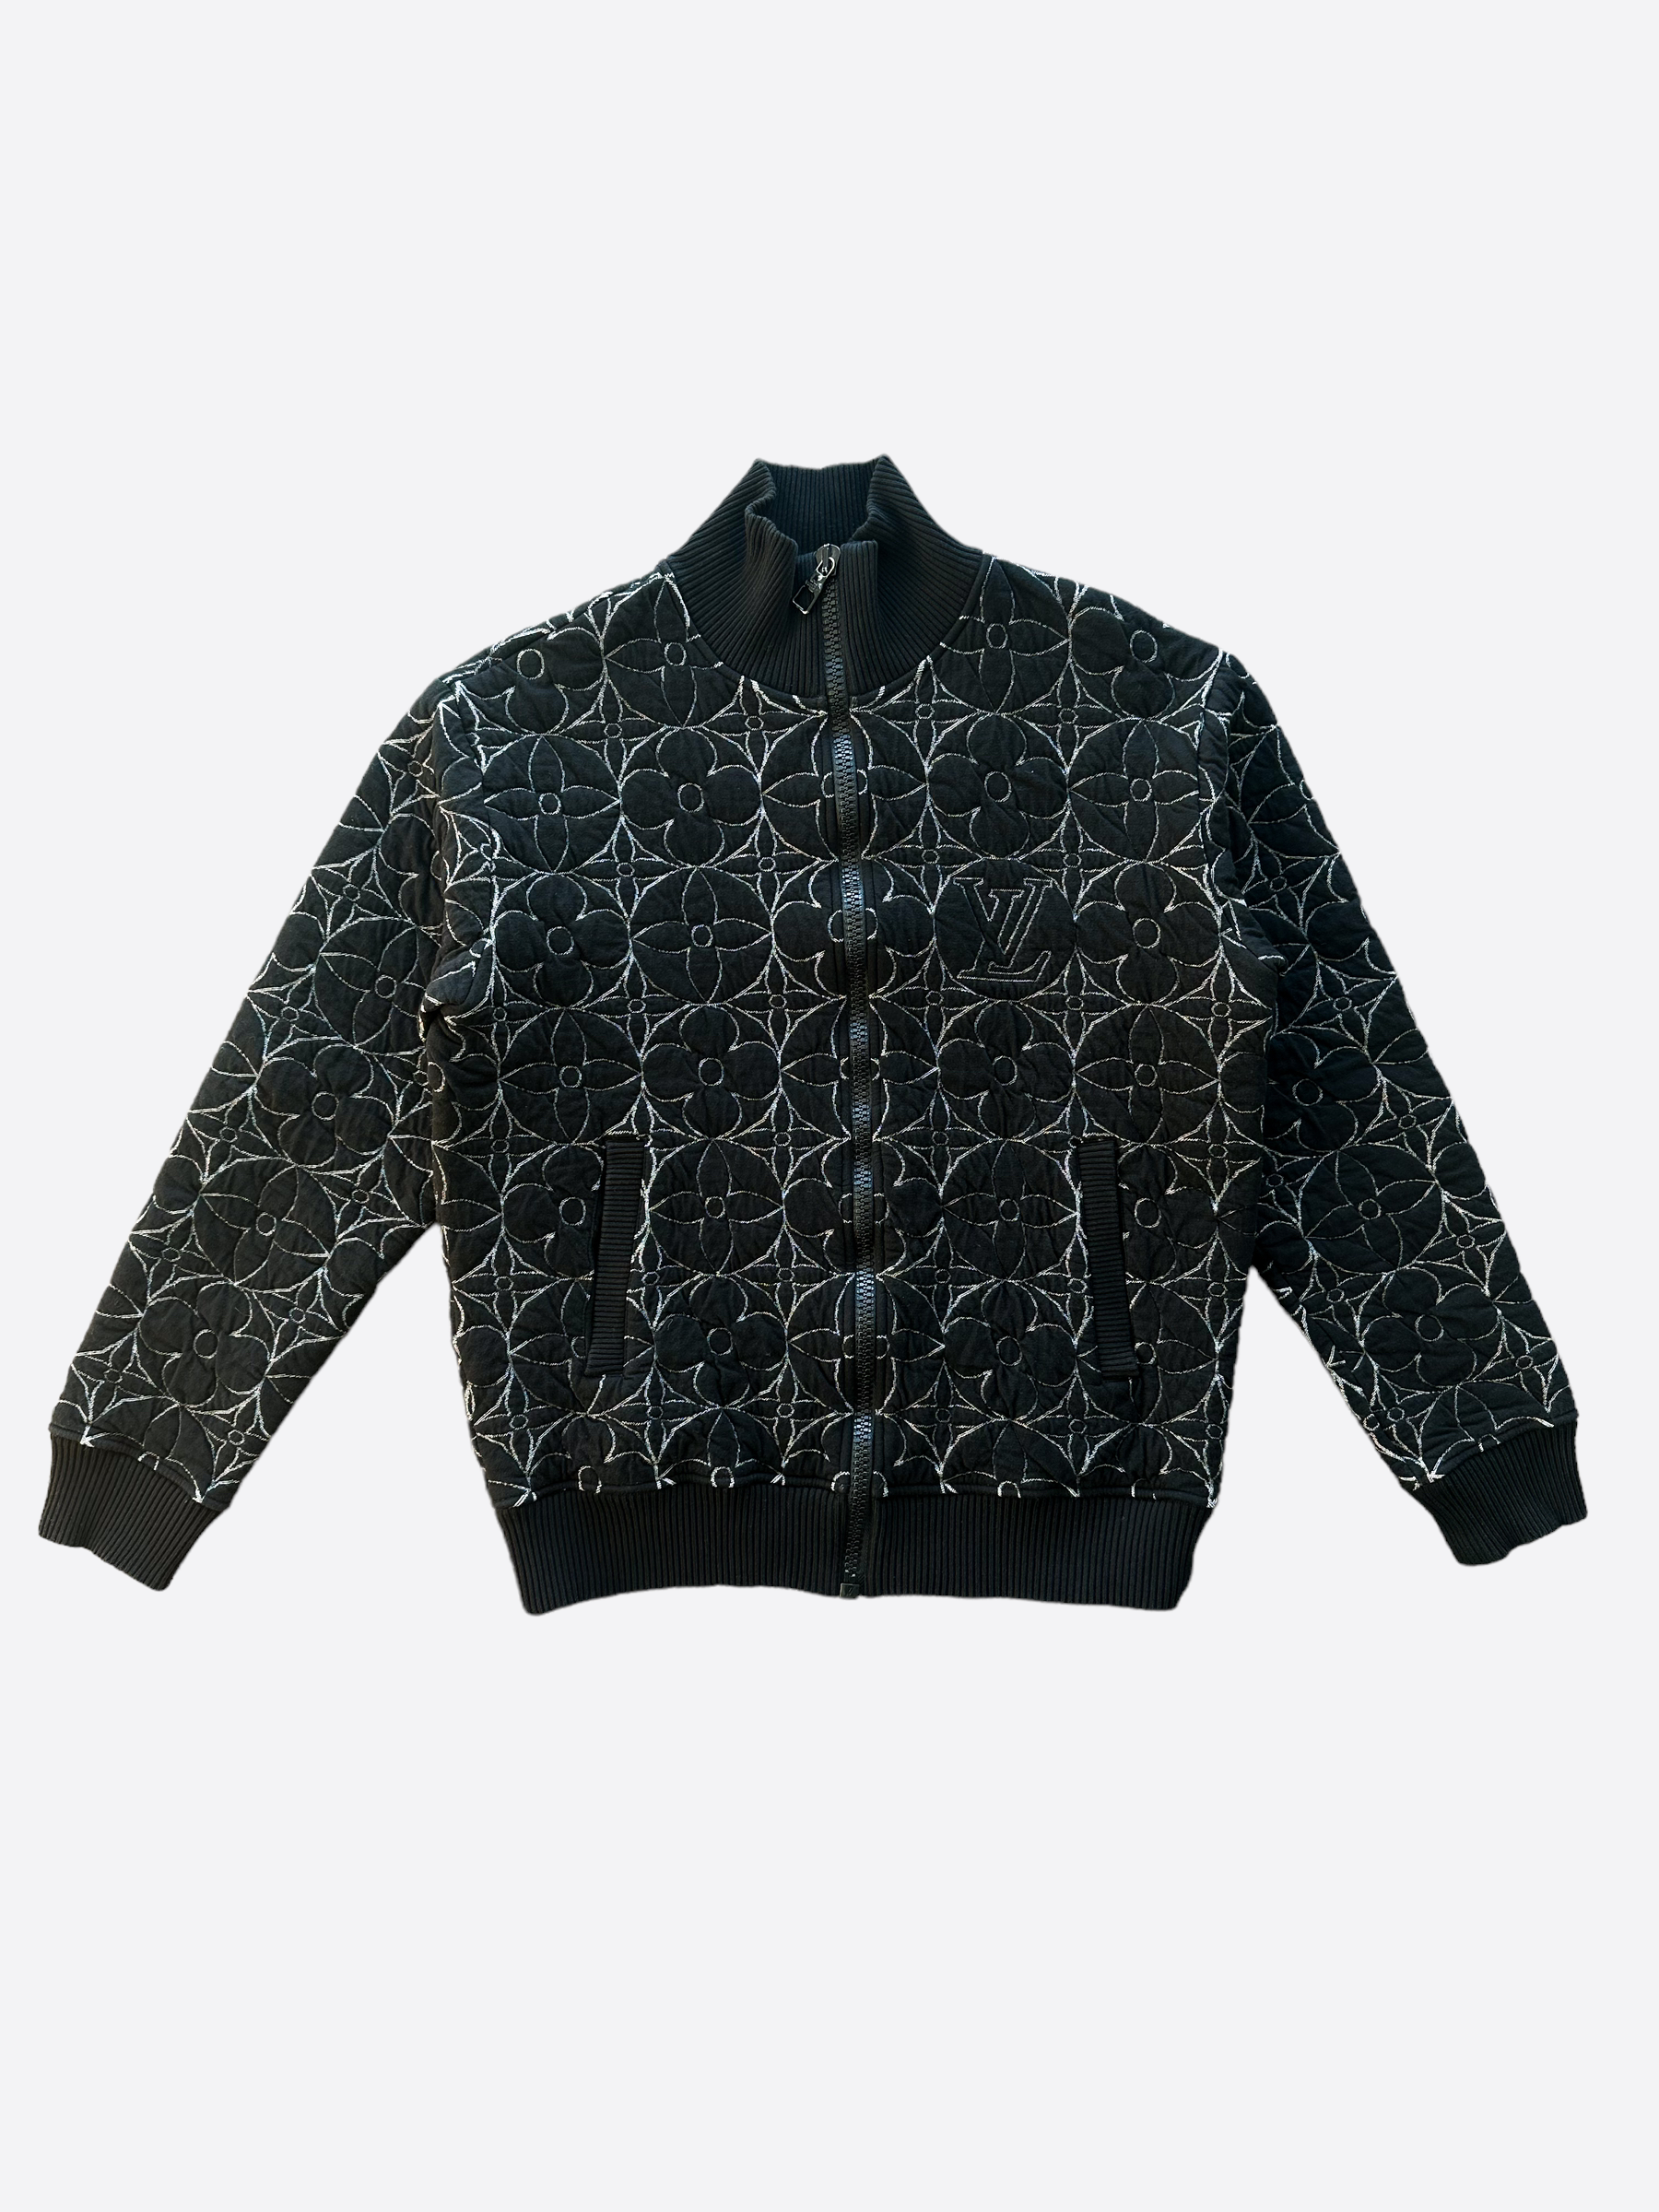 Louis Vuitton Black, Pattern Print 2021 LV Monogram Bomber Jacket Xs